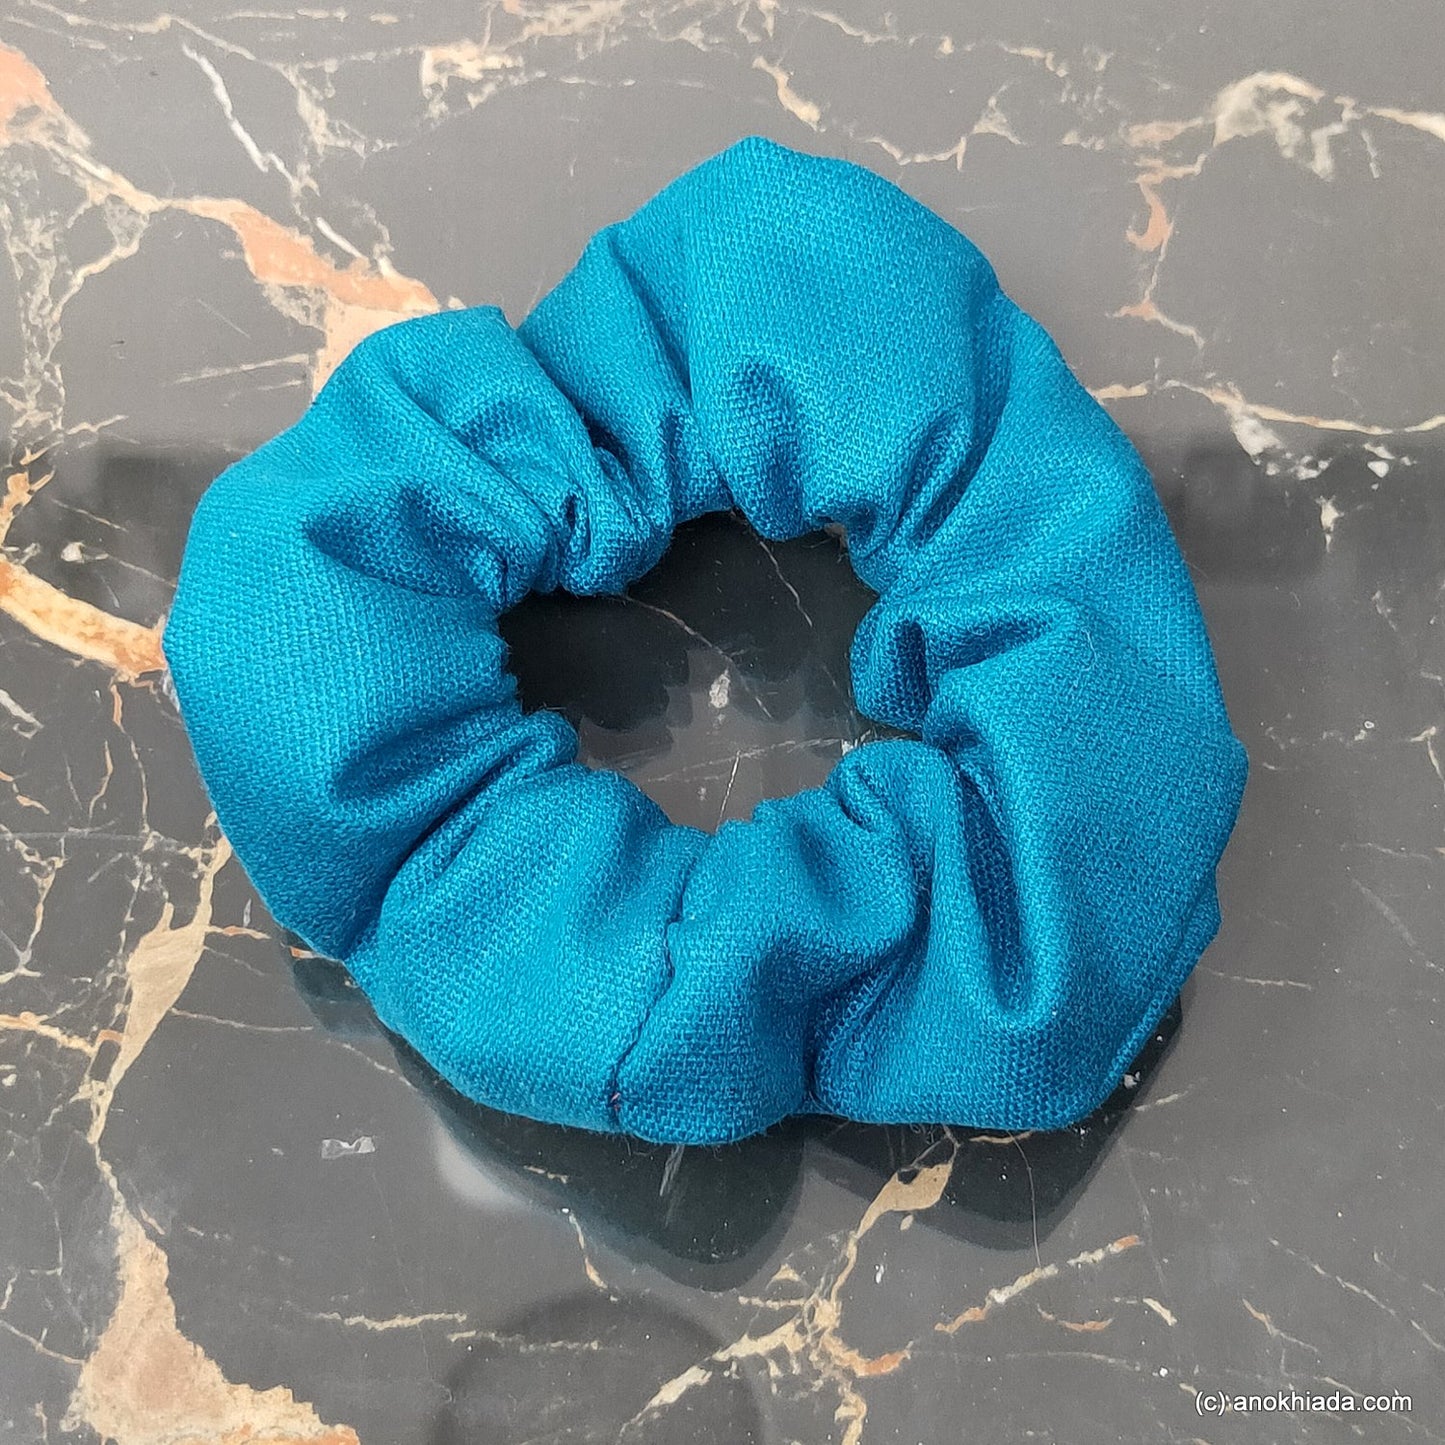 Anokhi Ada Handmade Fabric Scrunchie for Girls and Women (15-176 Scrunchie)